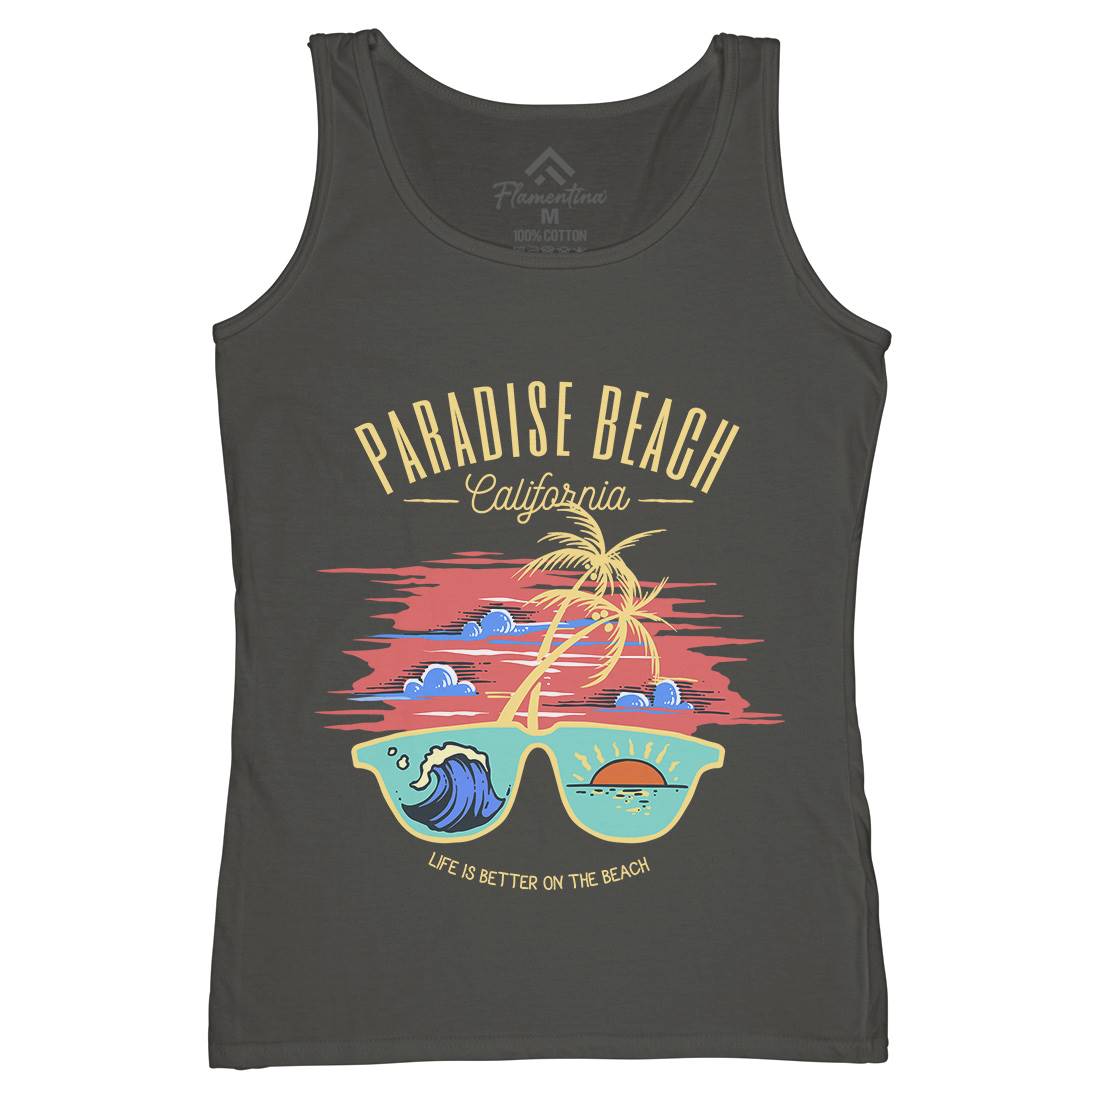 Sunglass Beach Womens Organic Tank Top Vest Holiday C780